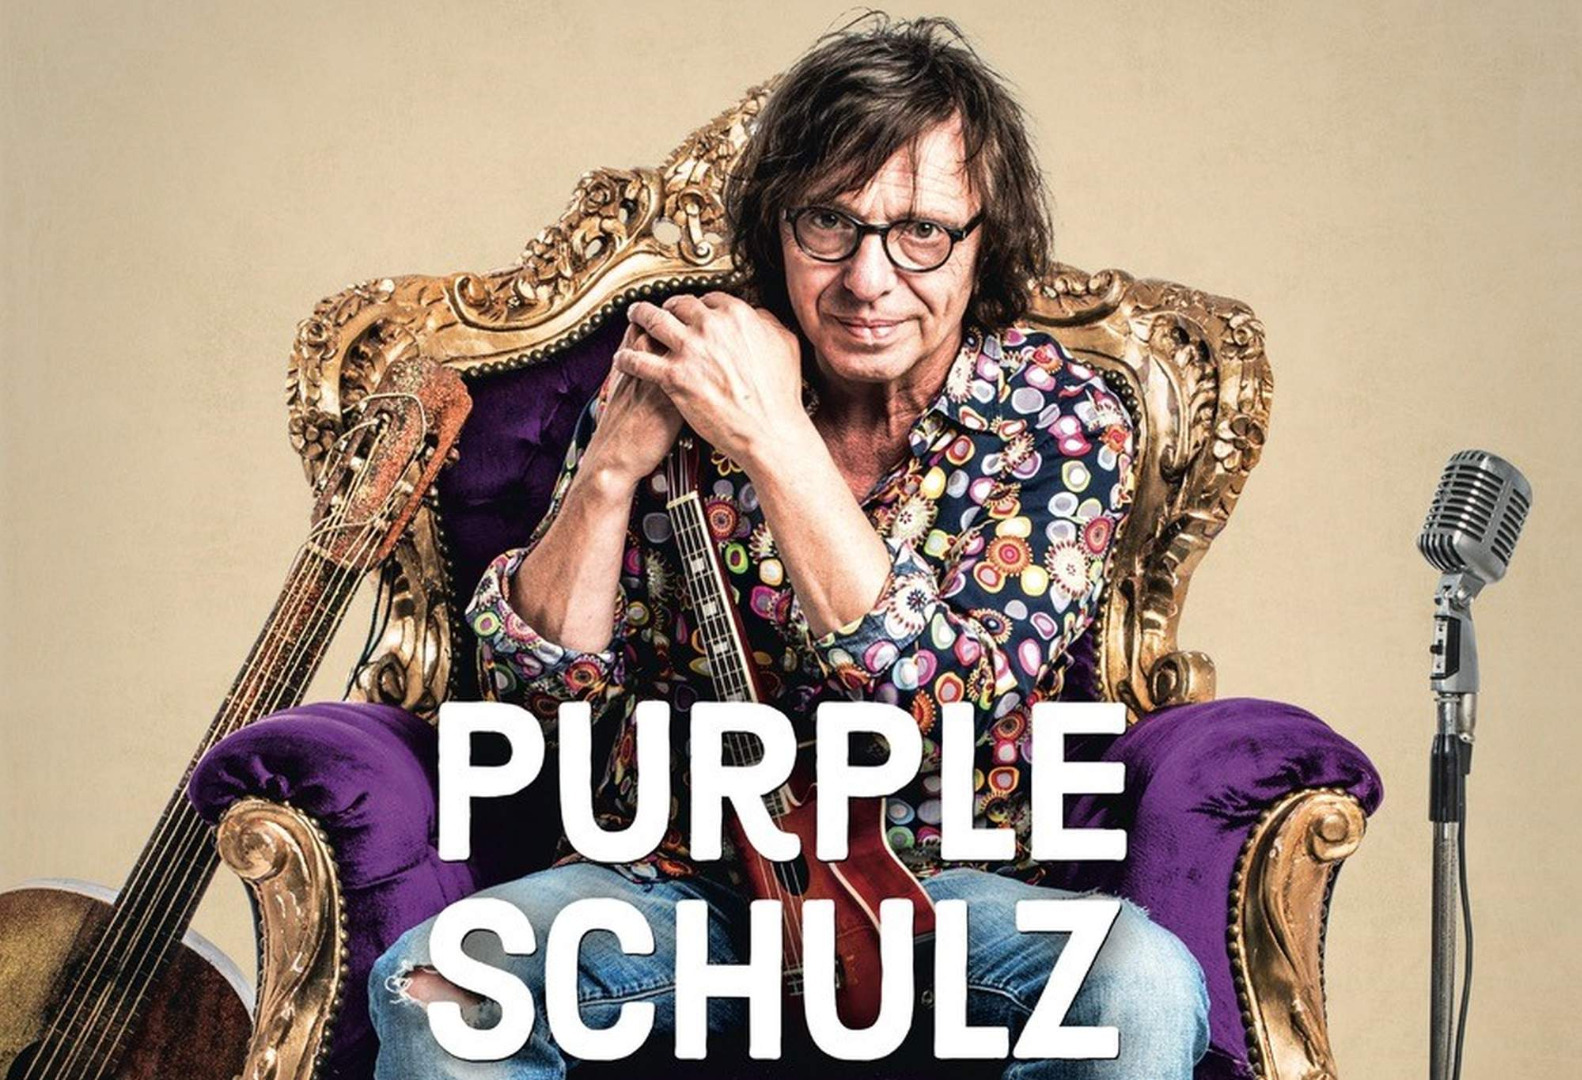 Purple Schulz